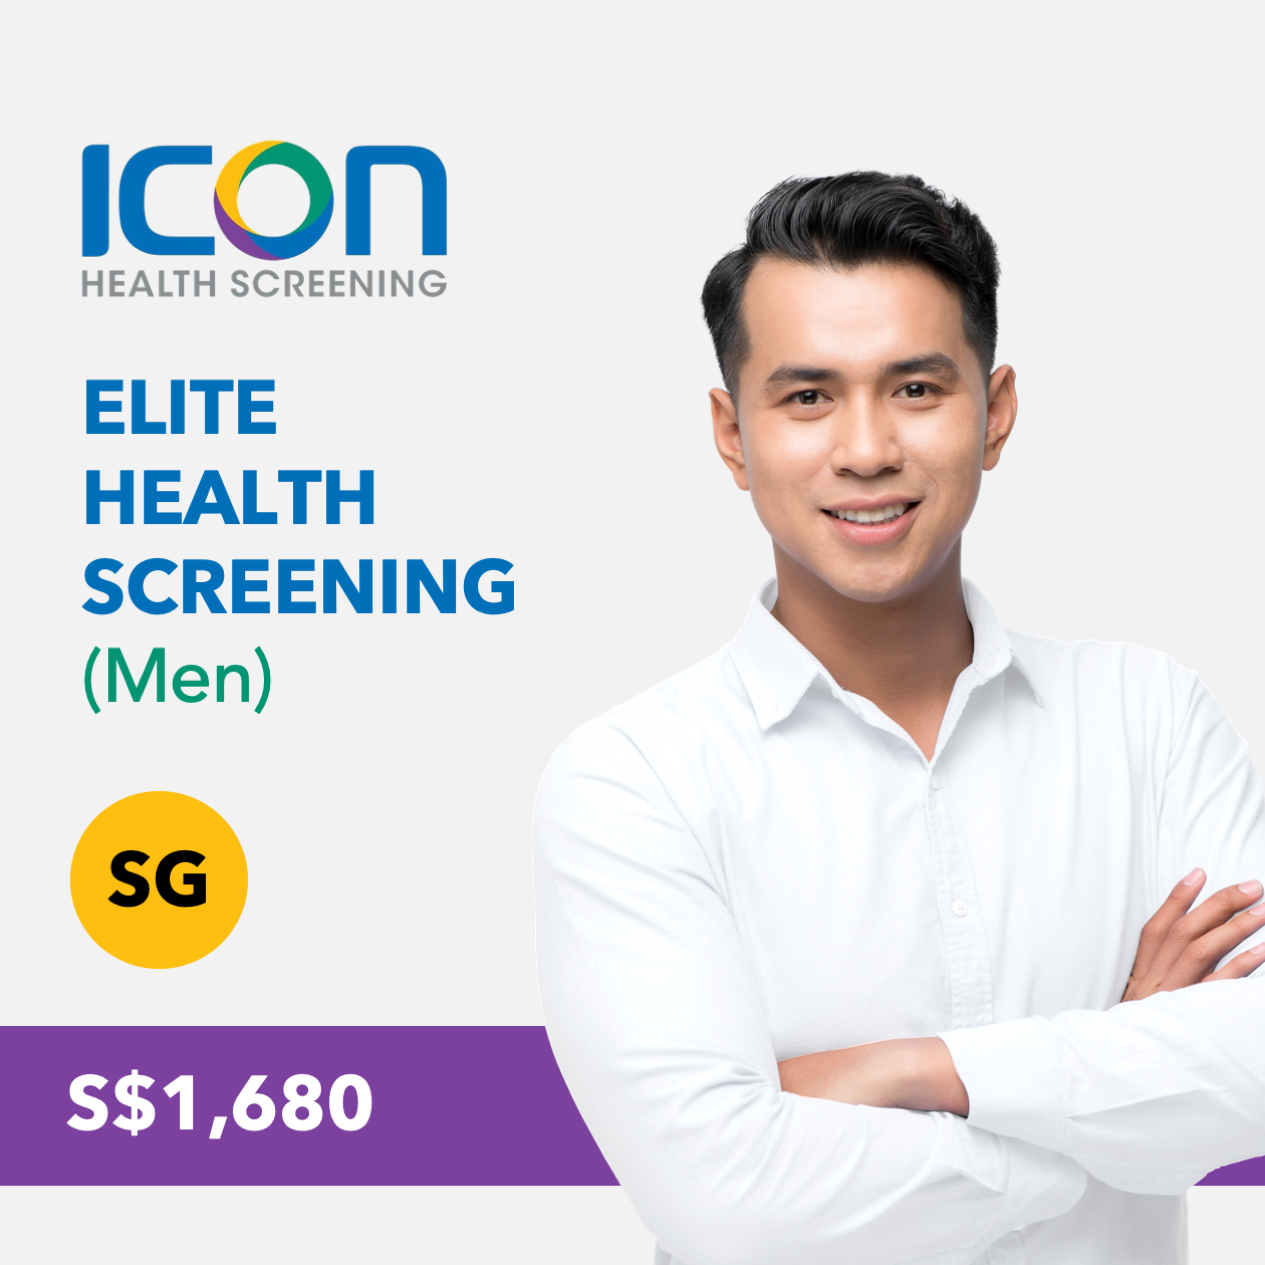 Icon Health Screening (SG) Men's Elite Health Screening